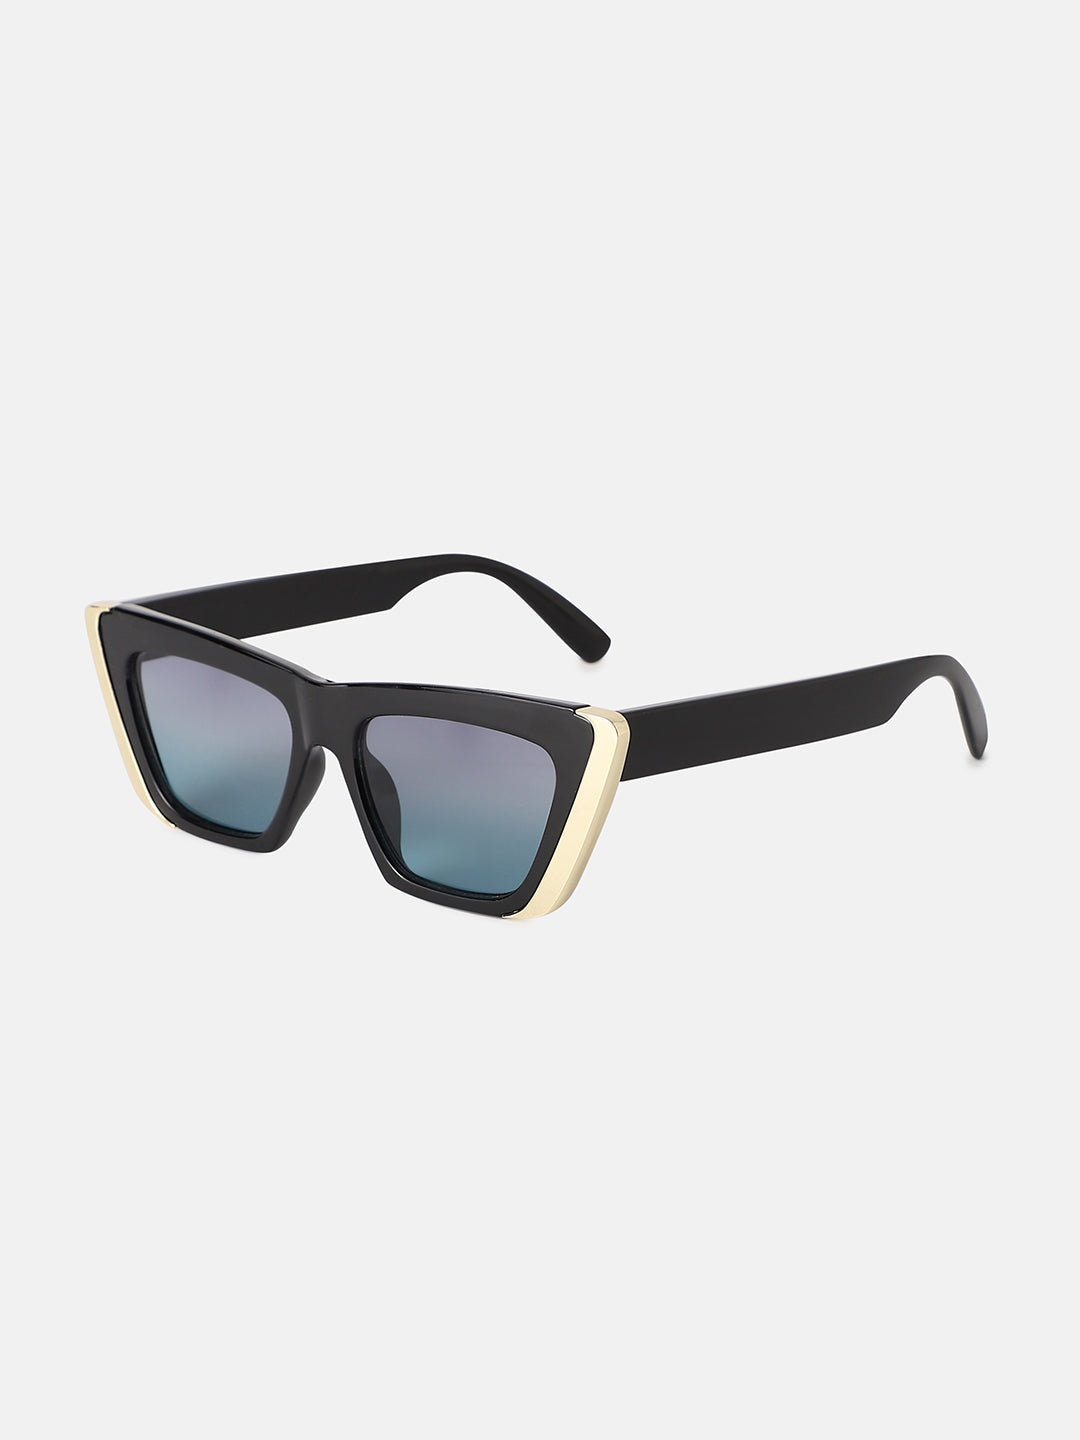 Women's Full Rim Cateye Sunglasses - Black